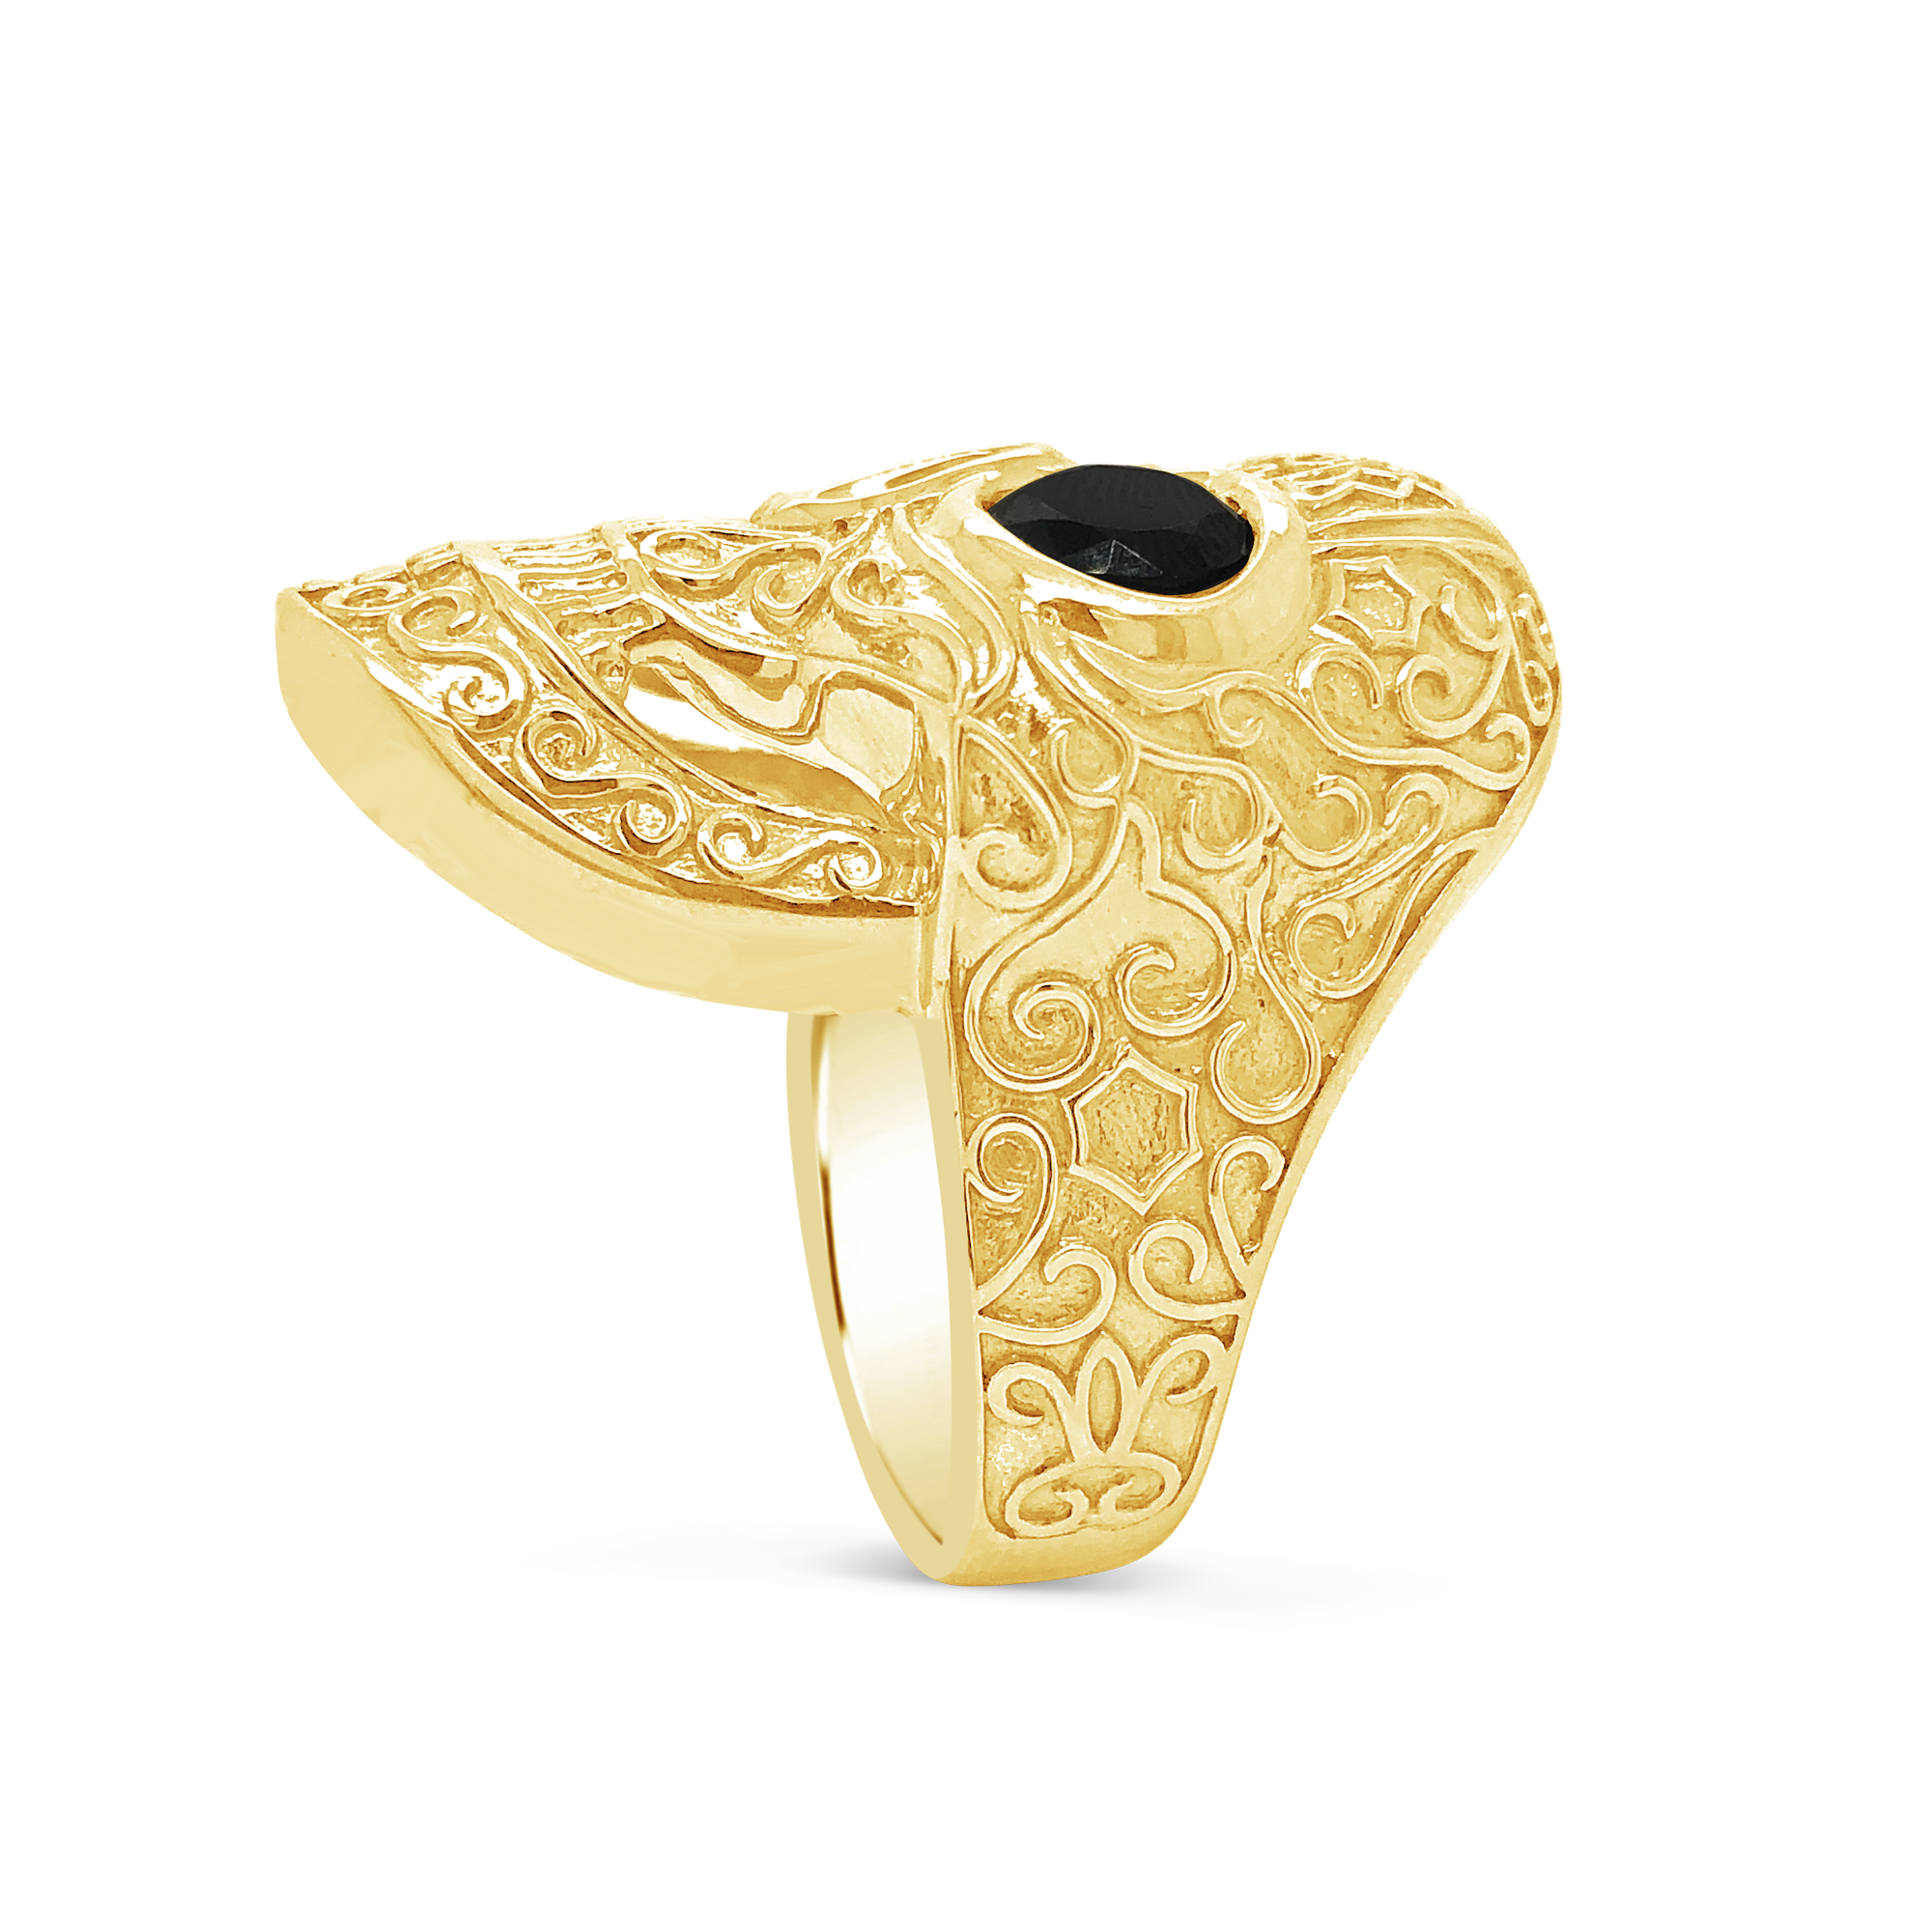 Gold Candy Skull Ring w/ Black Onyx 10K Yellow Gold